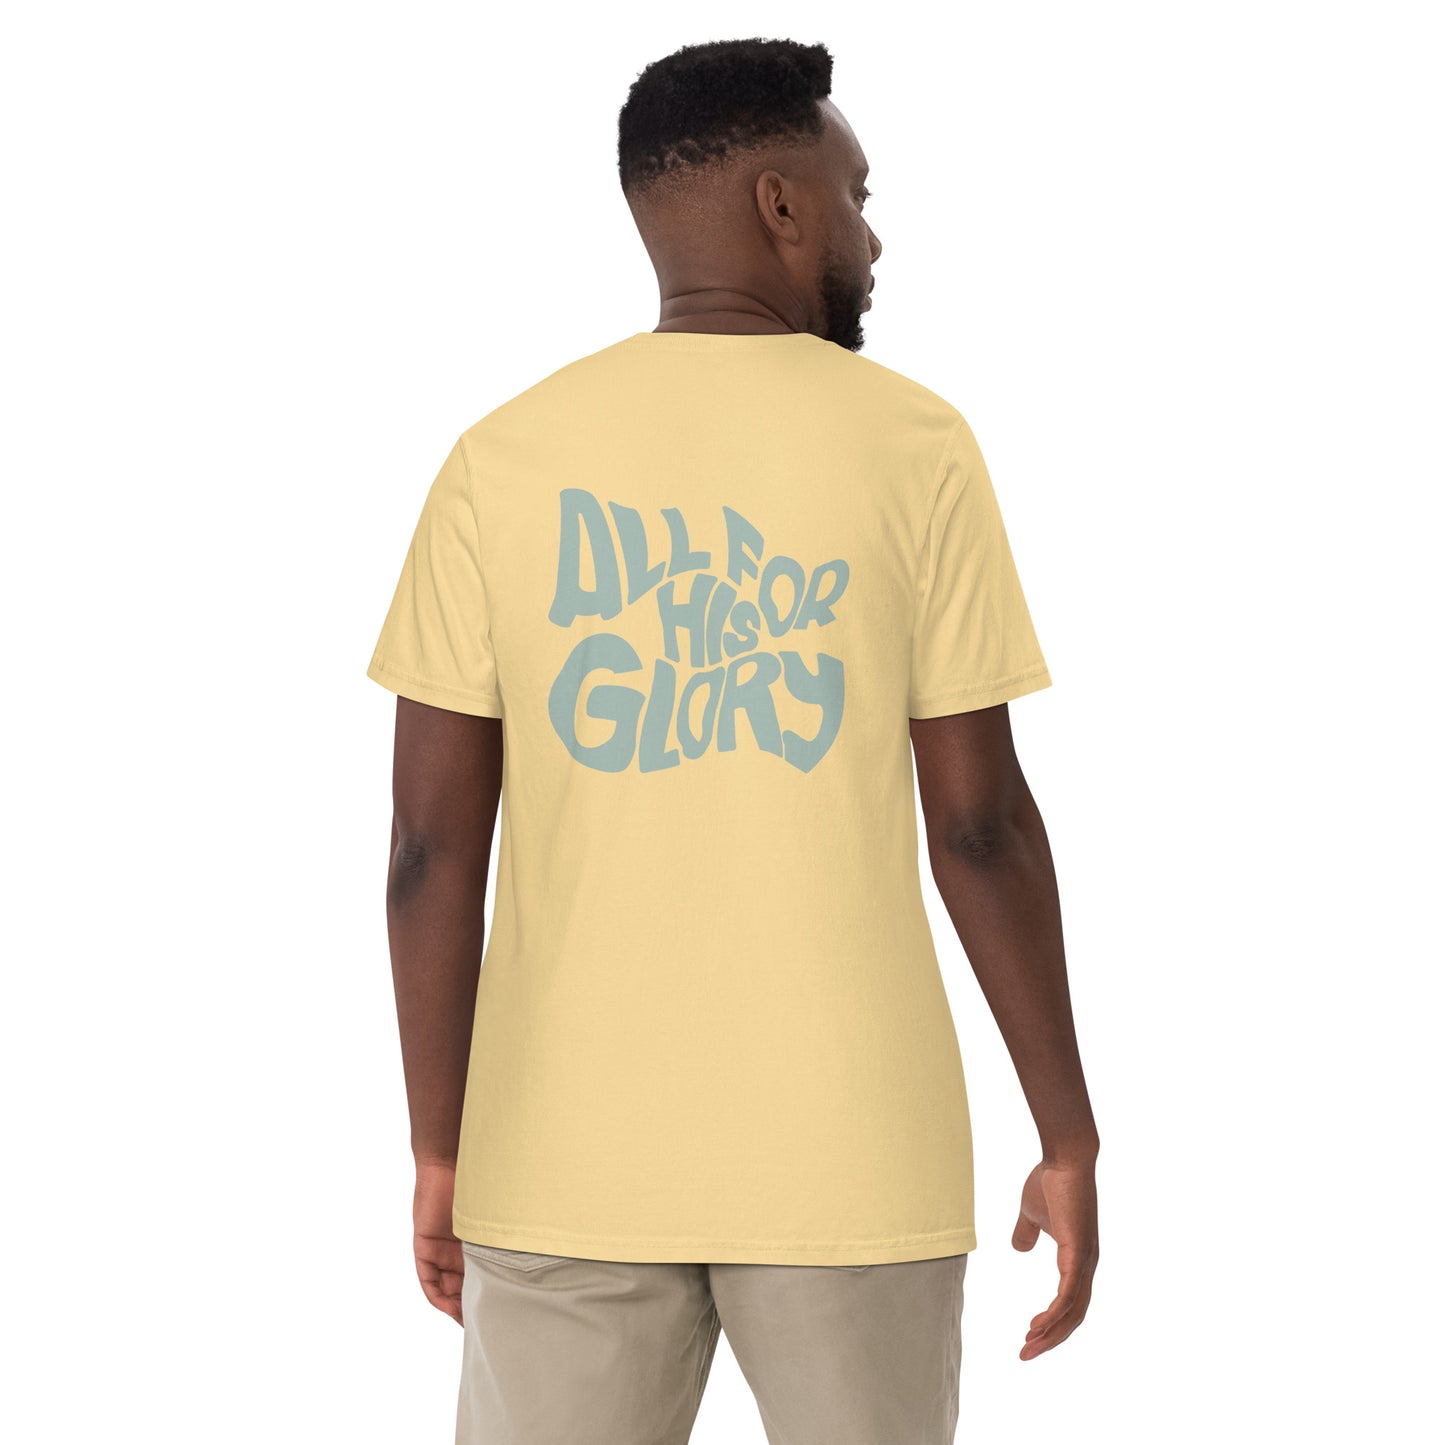 Gods glory garment-dyed heavyweight t-shirt